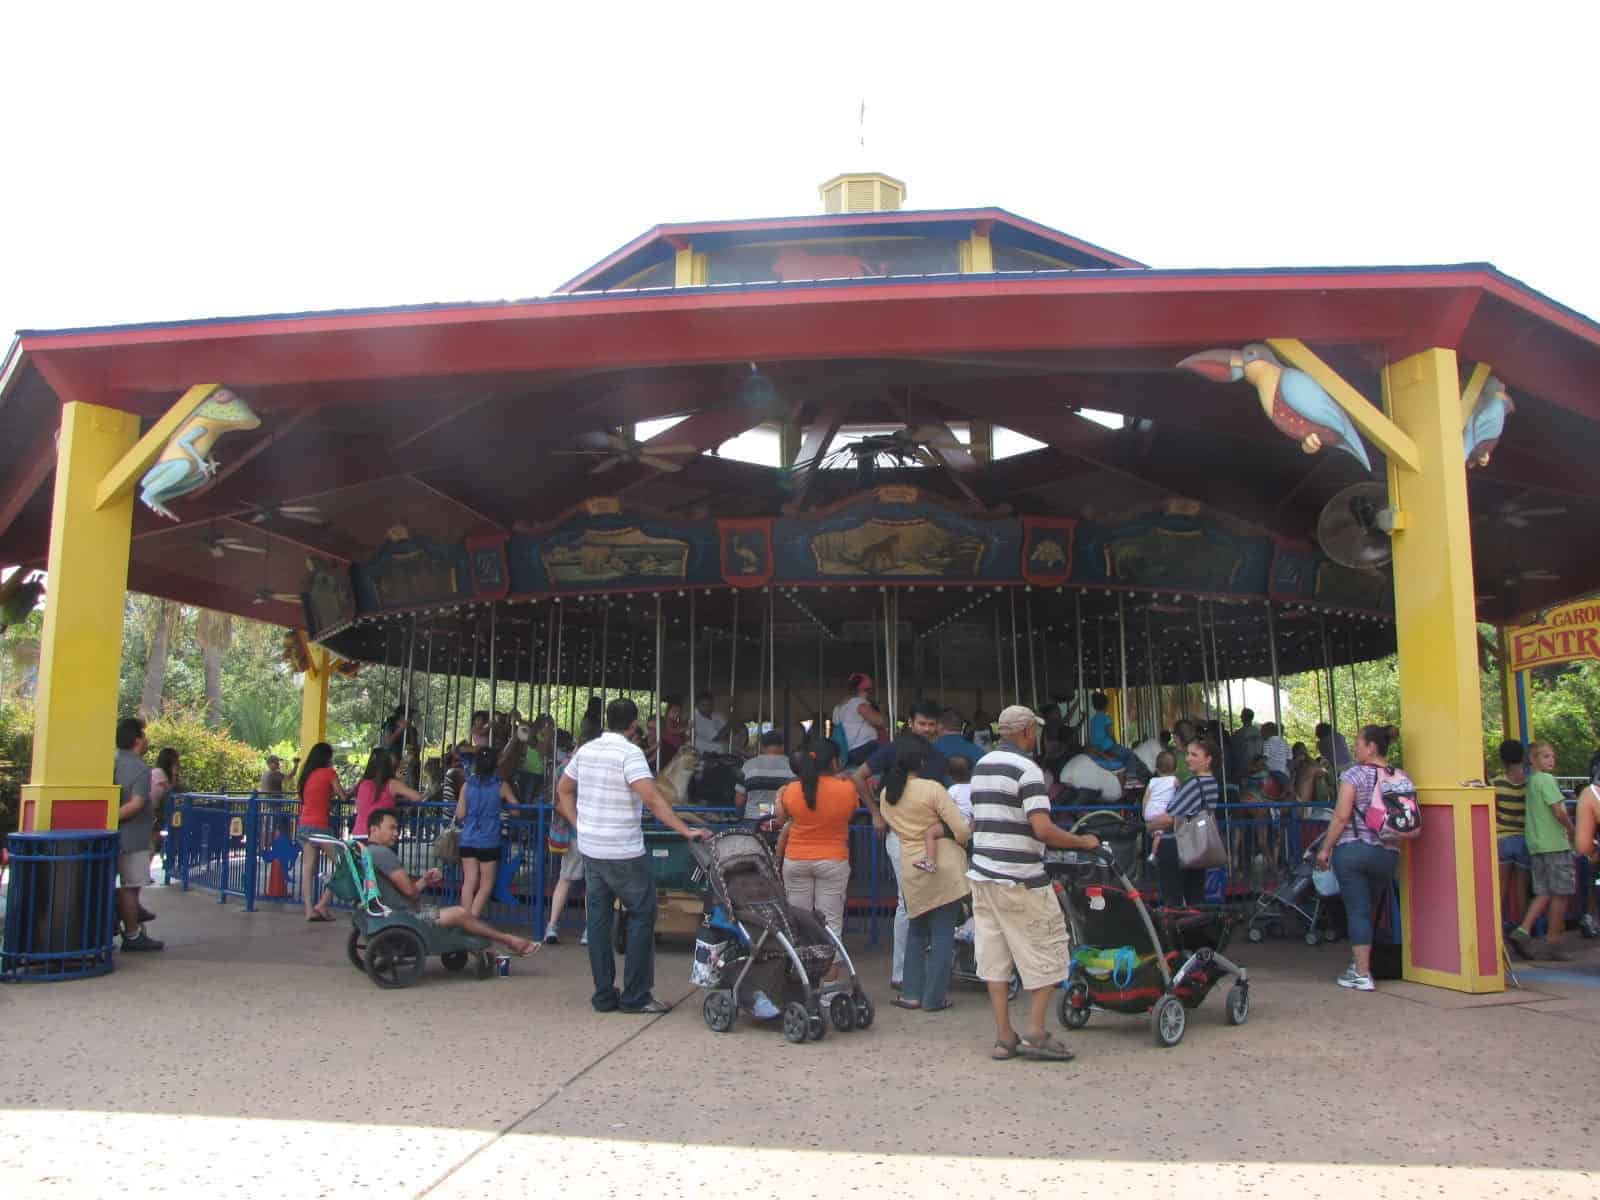 Childrens Zoo Carousel in Houston TX